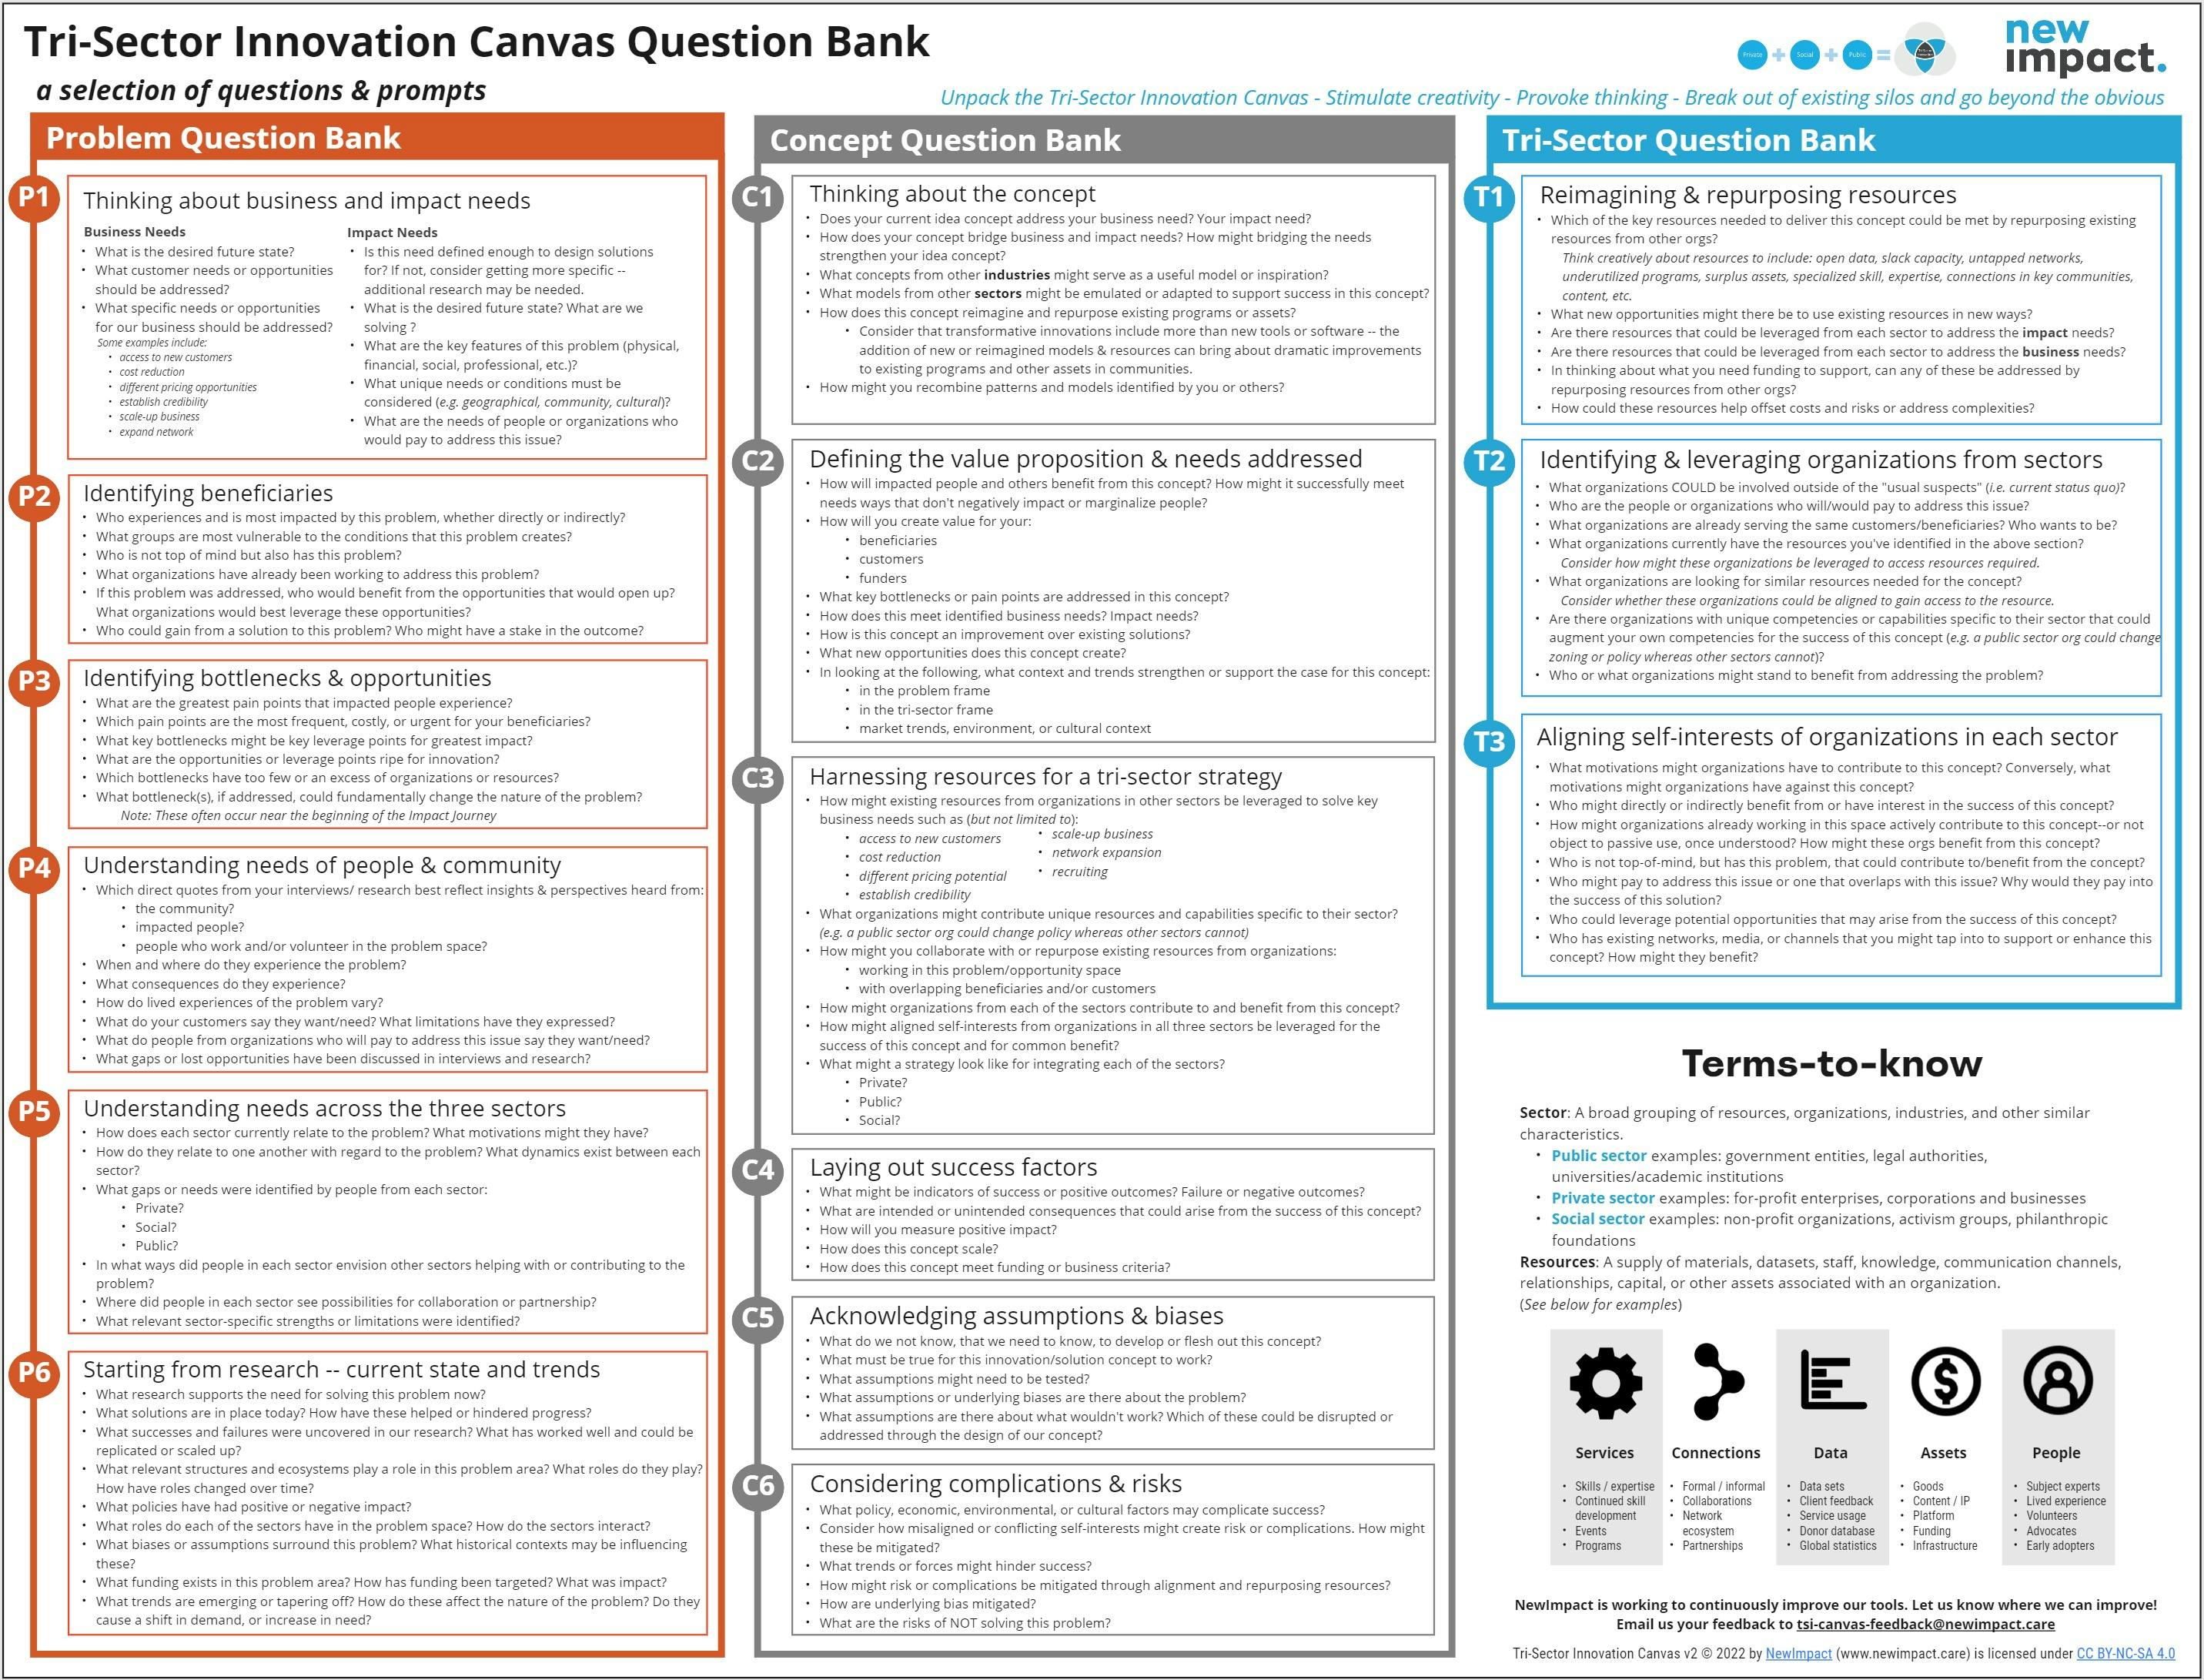 pdf template - questions.jpg